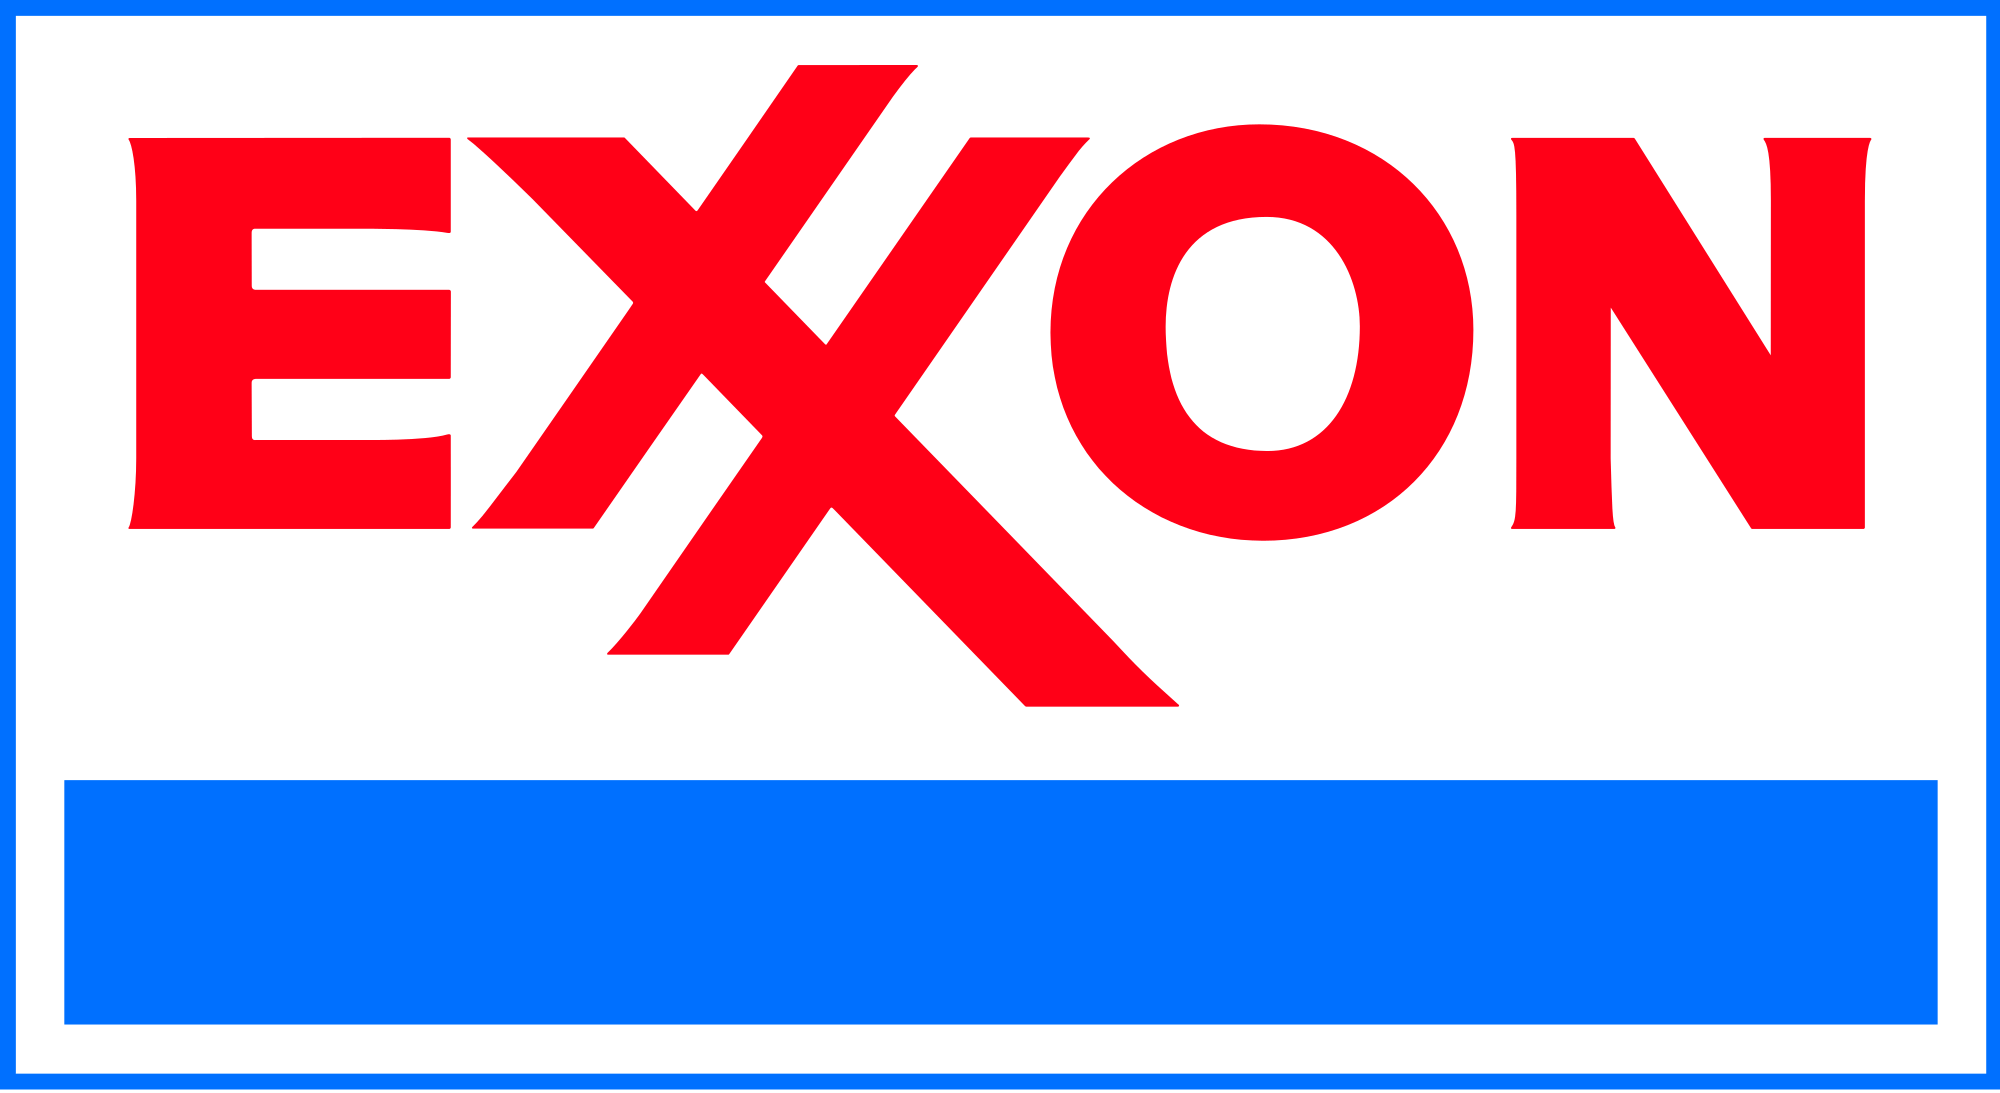 Old Exxon Logo - File:Exxon logo.svg - Wikimedia Commons